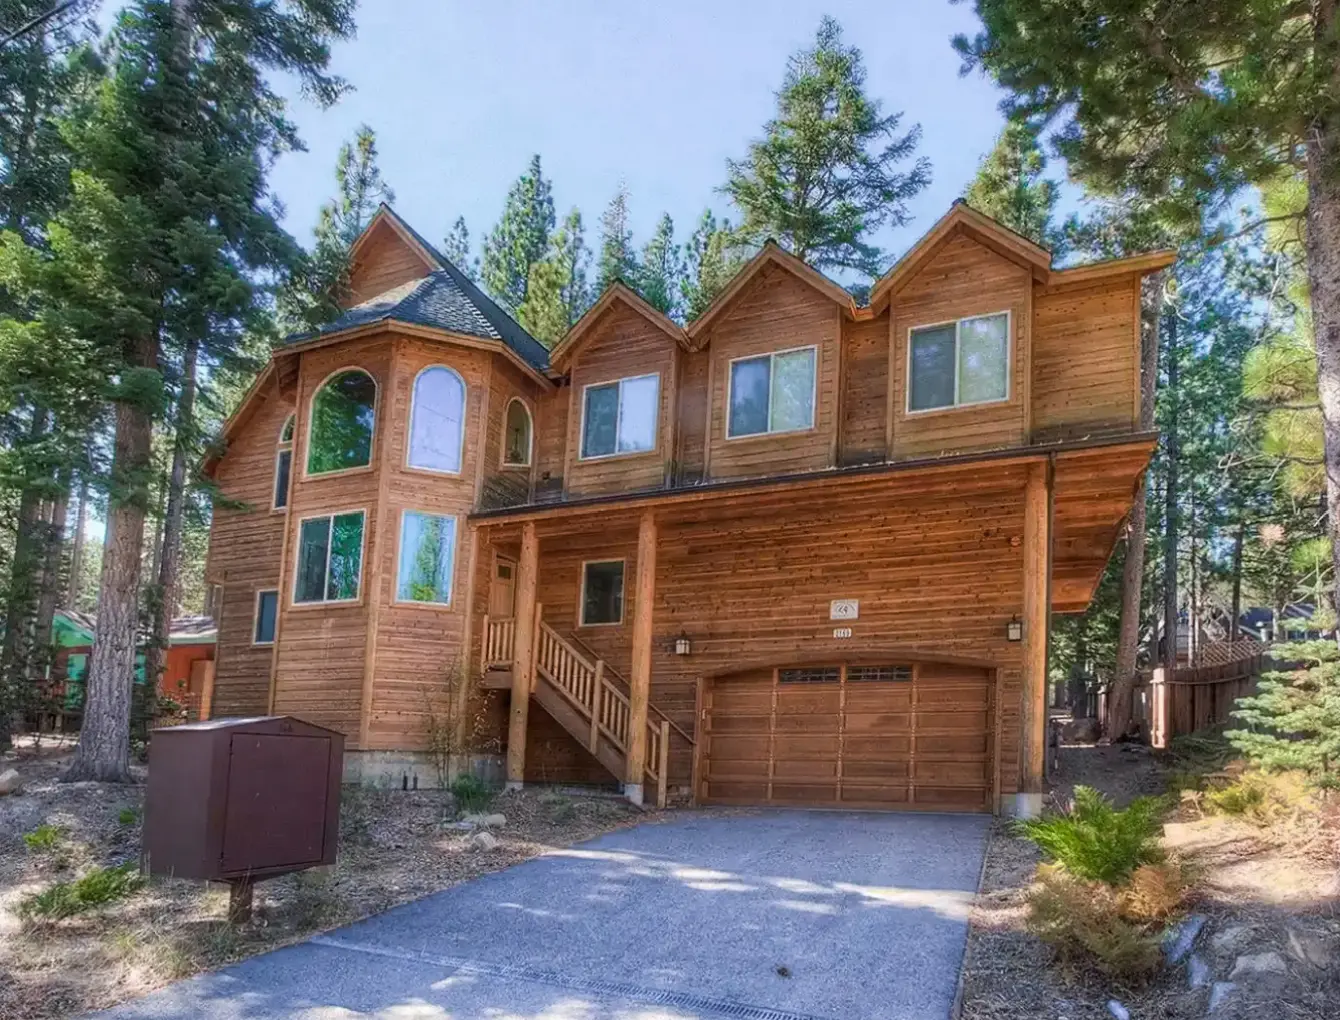 Vacation cabin rental at log cabin in lake tahoe